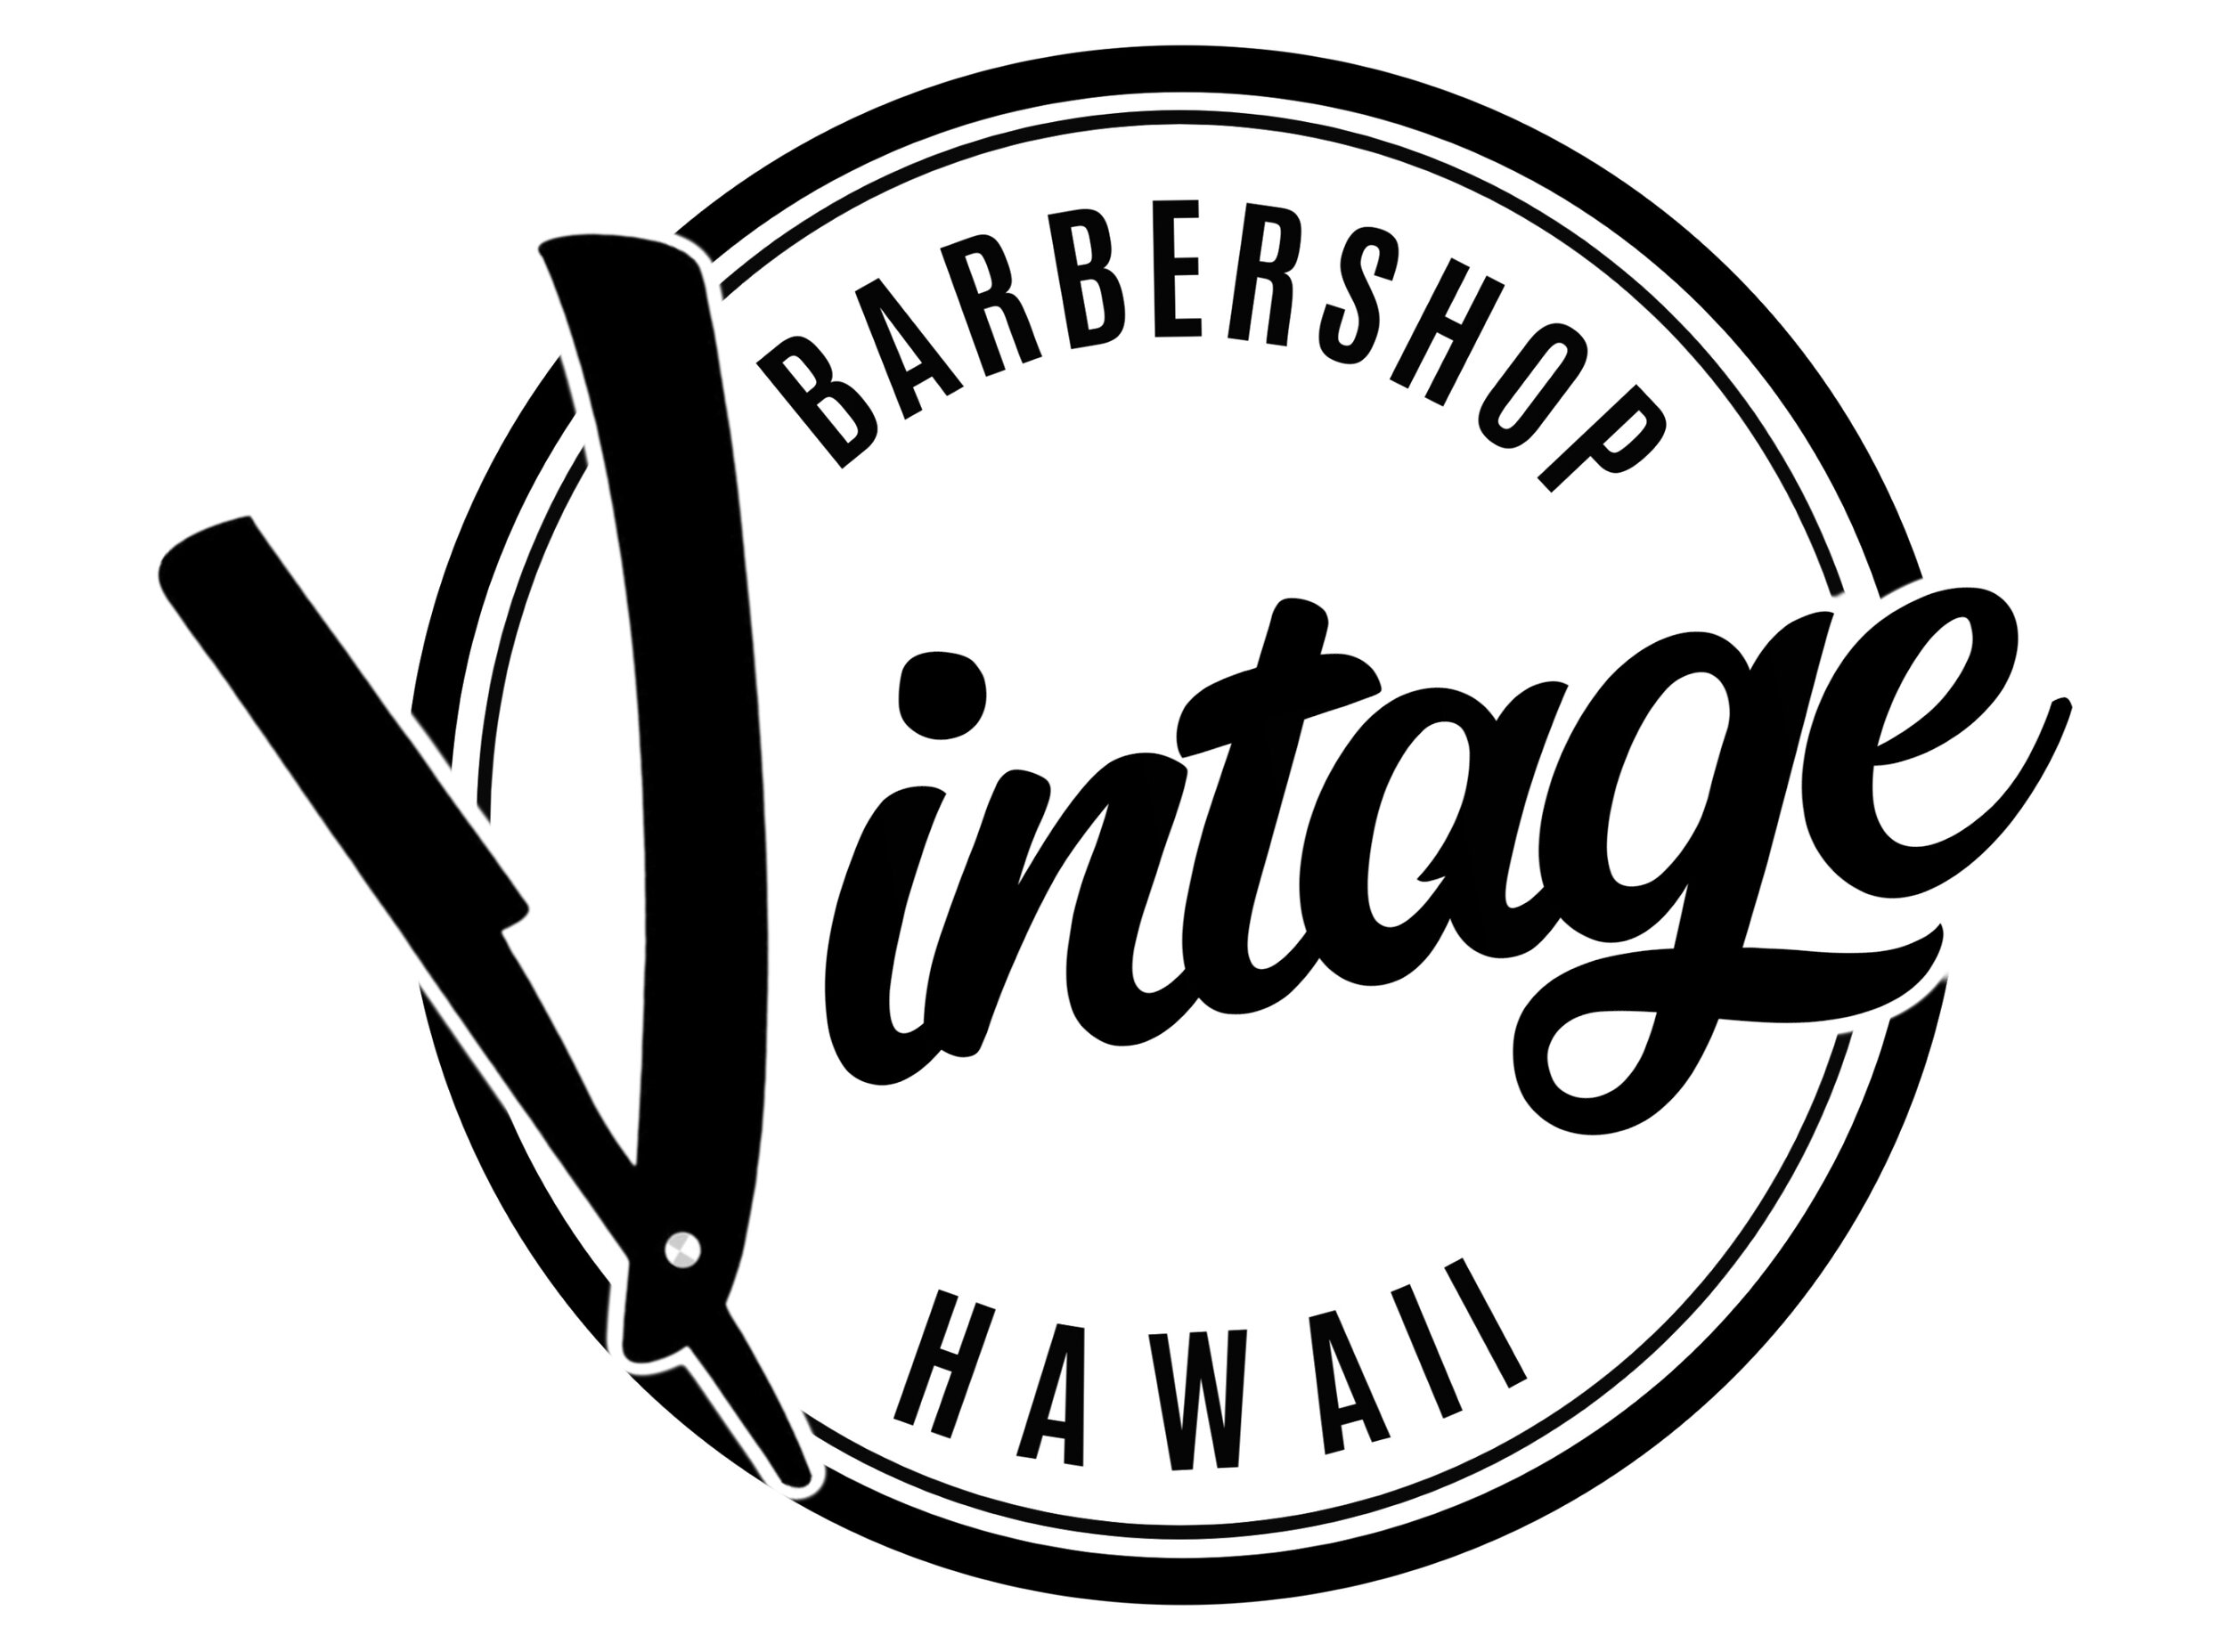 Vintage Barbershop Hawaii, Barber Shop